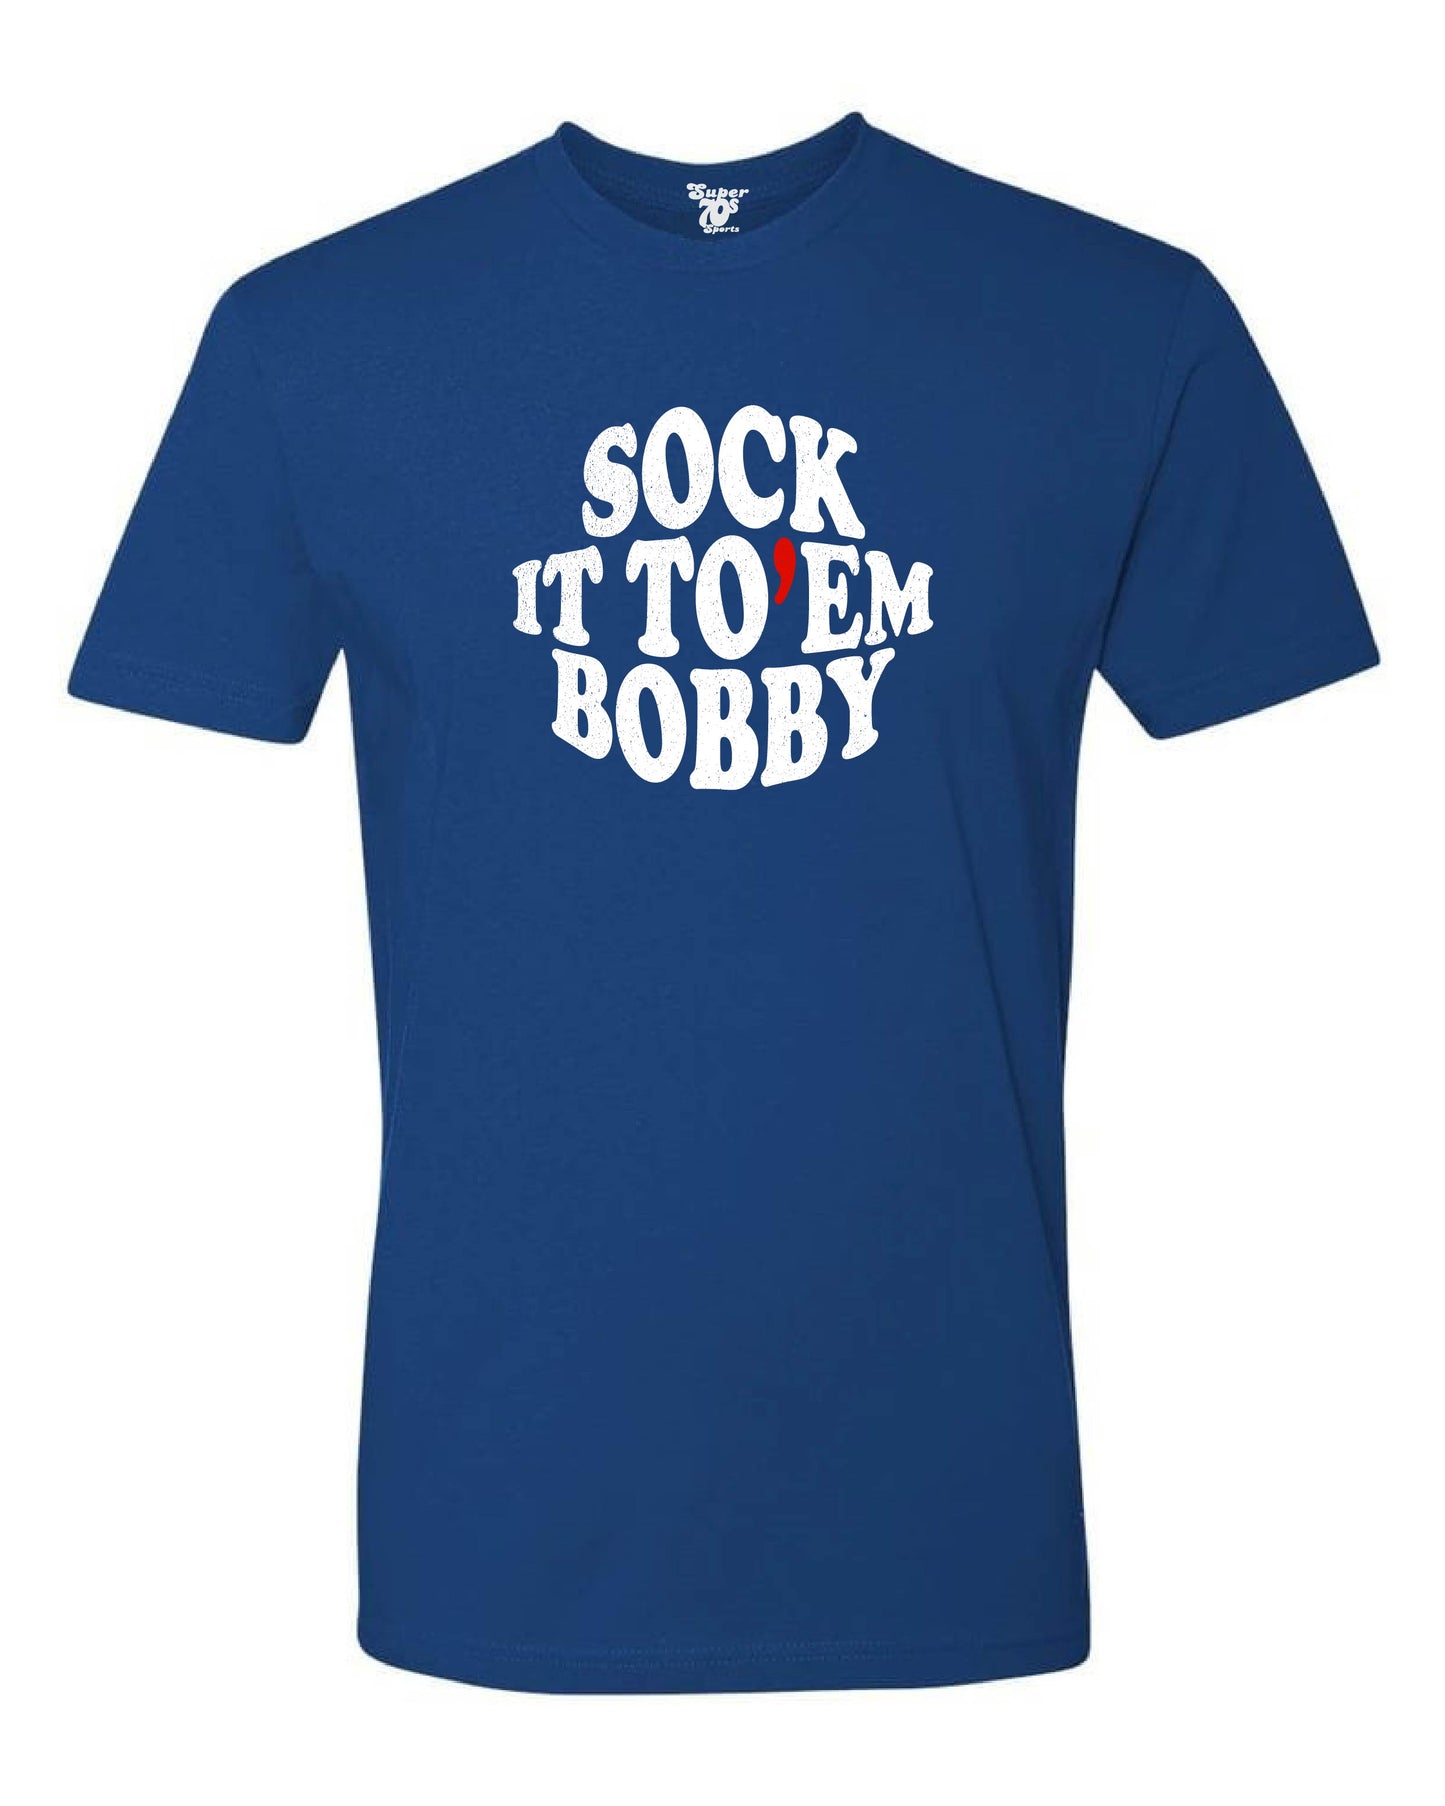 Sock It To Em Bobby Tee